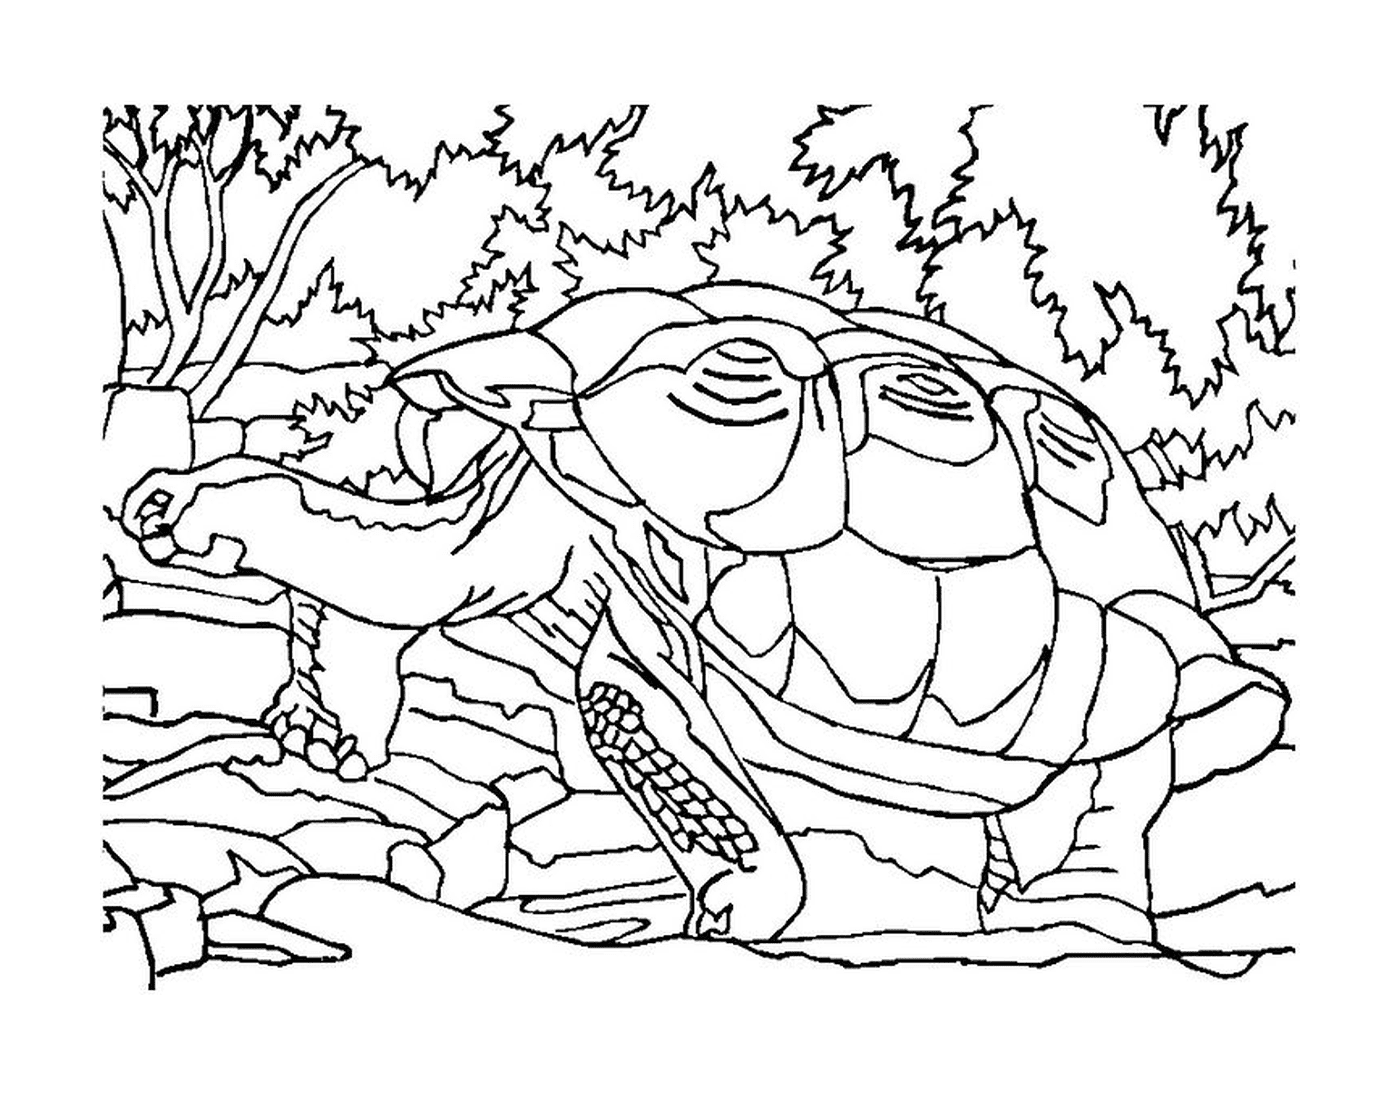  Черепаха в лесу 